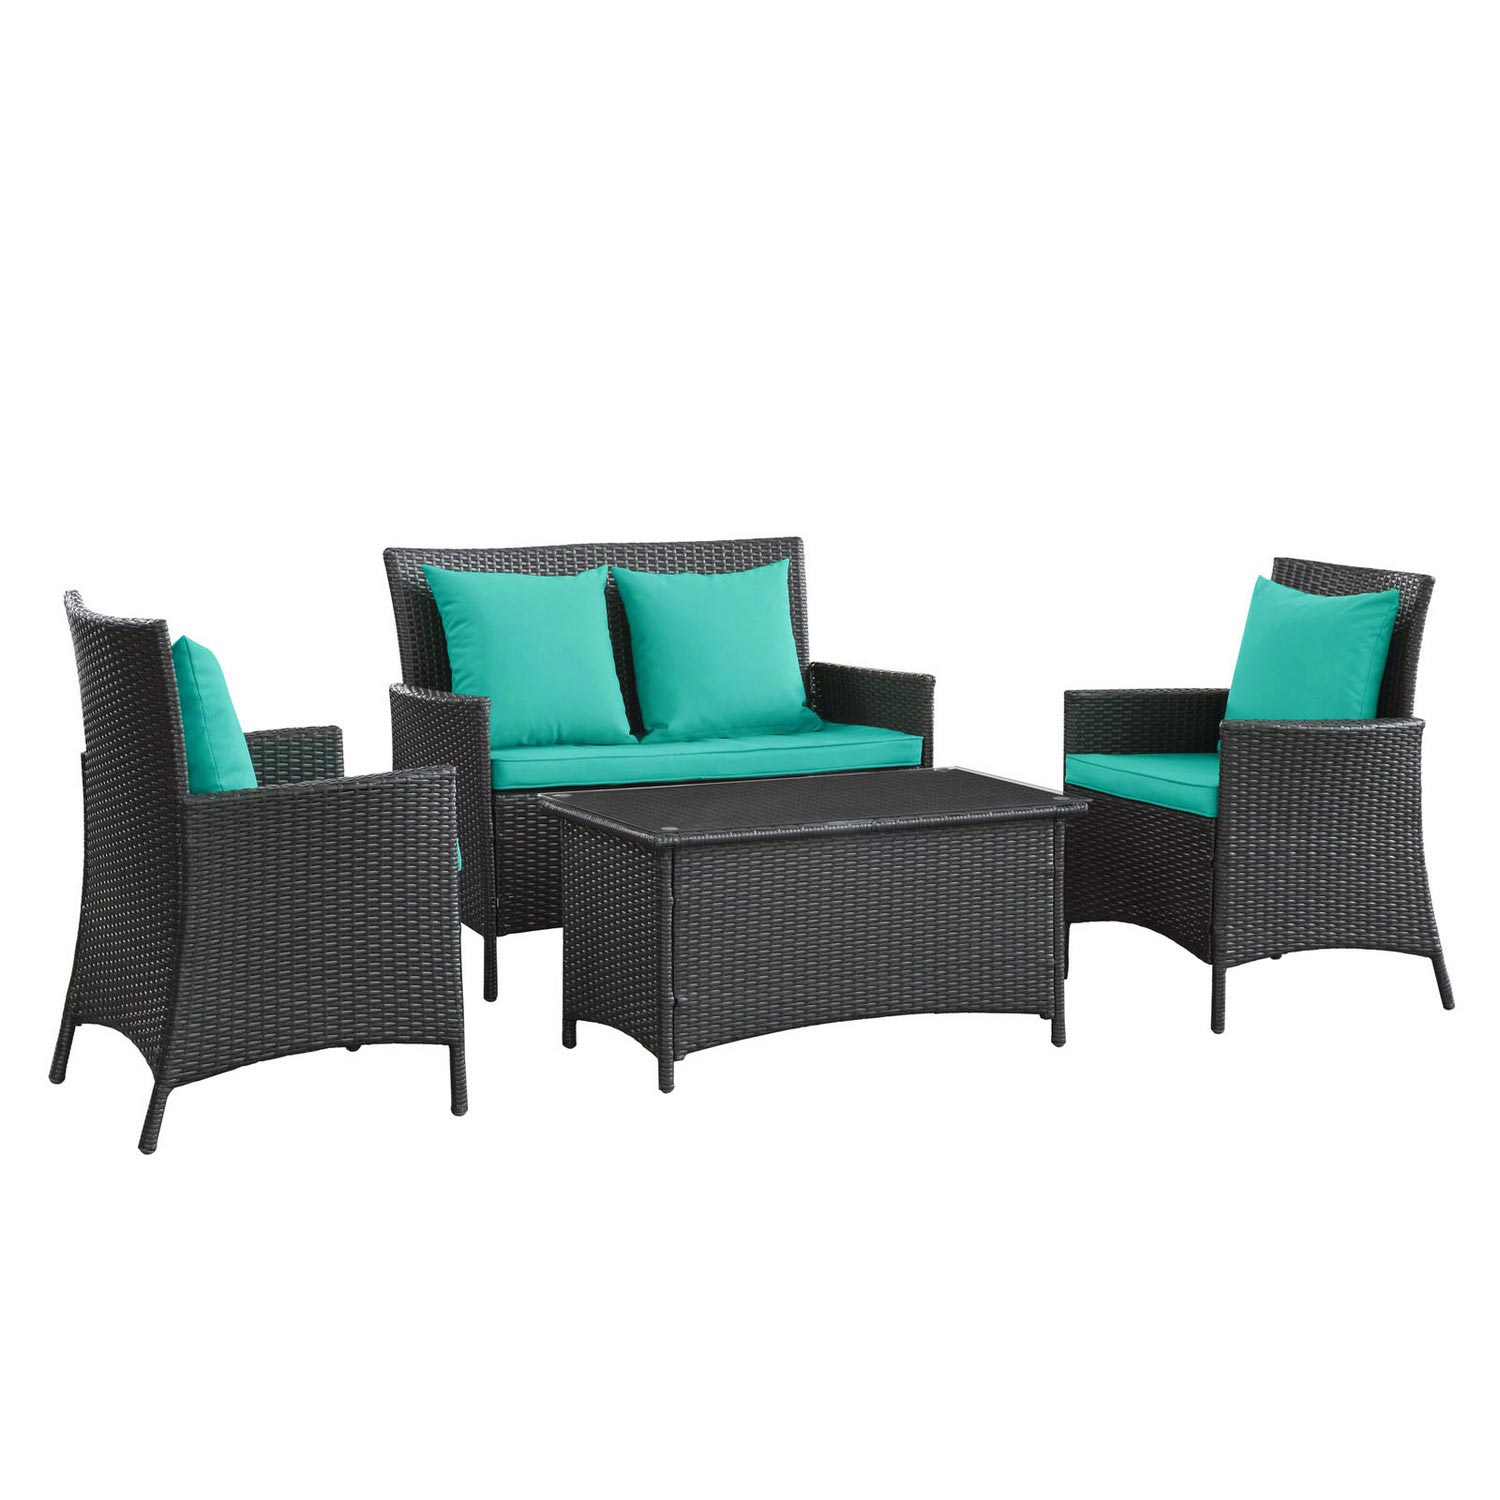 Modway Flourish 4 Piece Outdoor Patio Sofa Set - Espresso/Turquoise